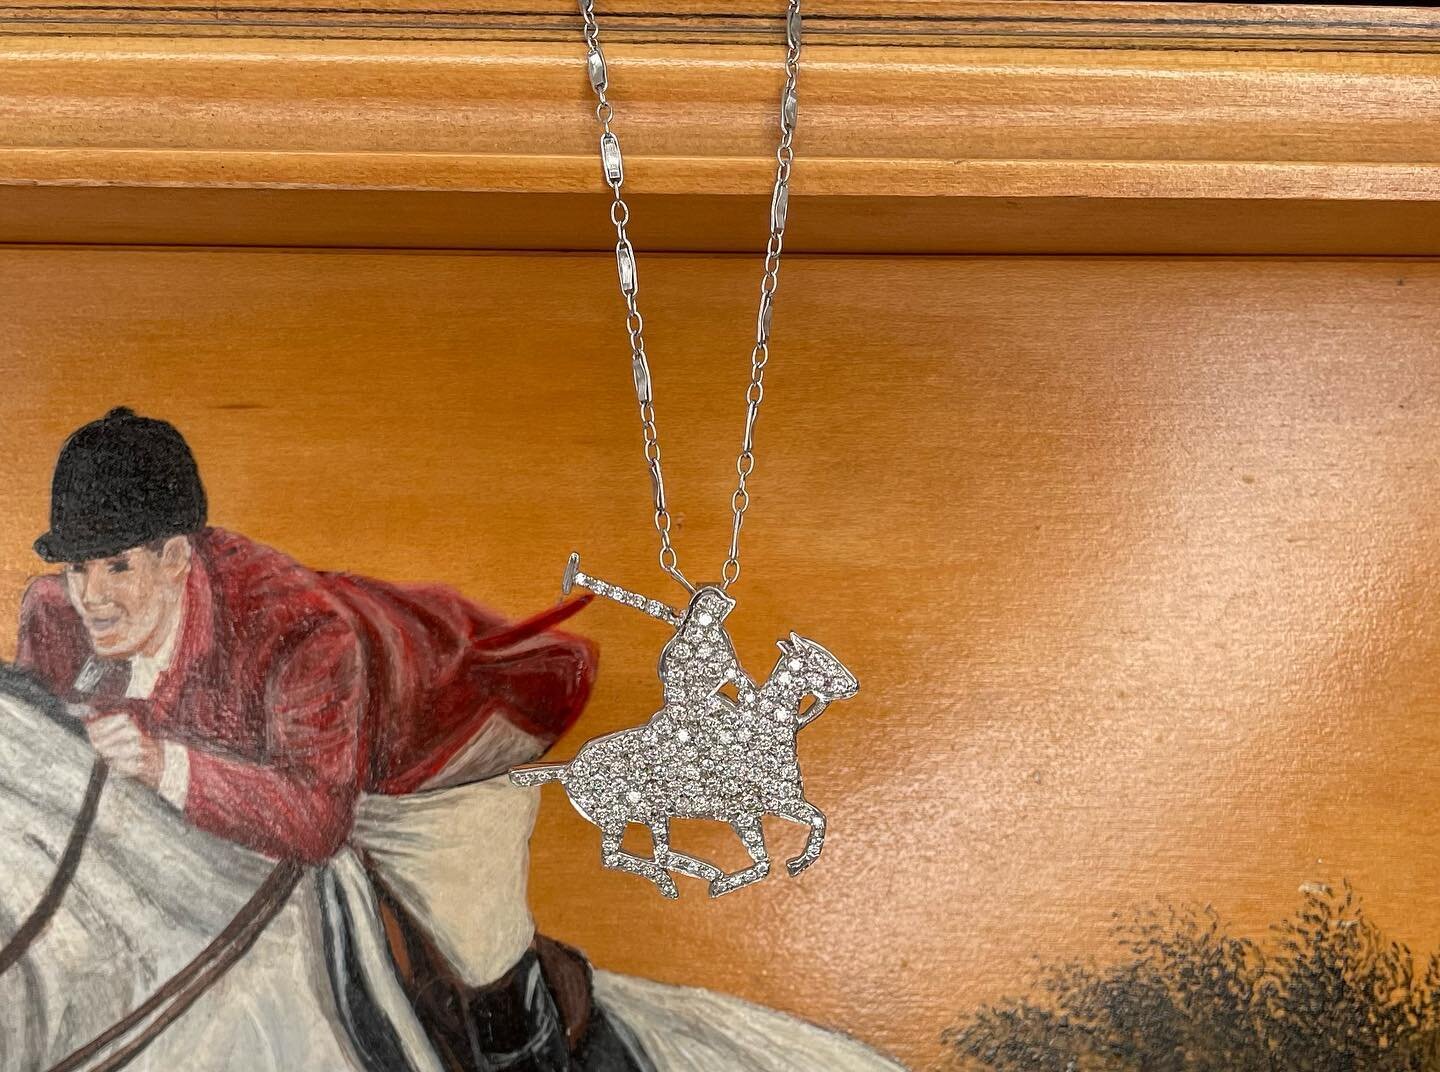 Beautiful Diamond polo rider necklace! 
#diamond #polo #equestrianjewelry #horsejewelry #jewelery #horses #jewelry #jewelrydesigner #necklaces